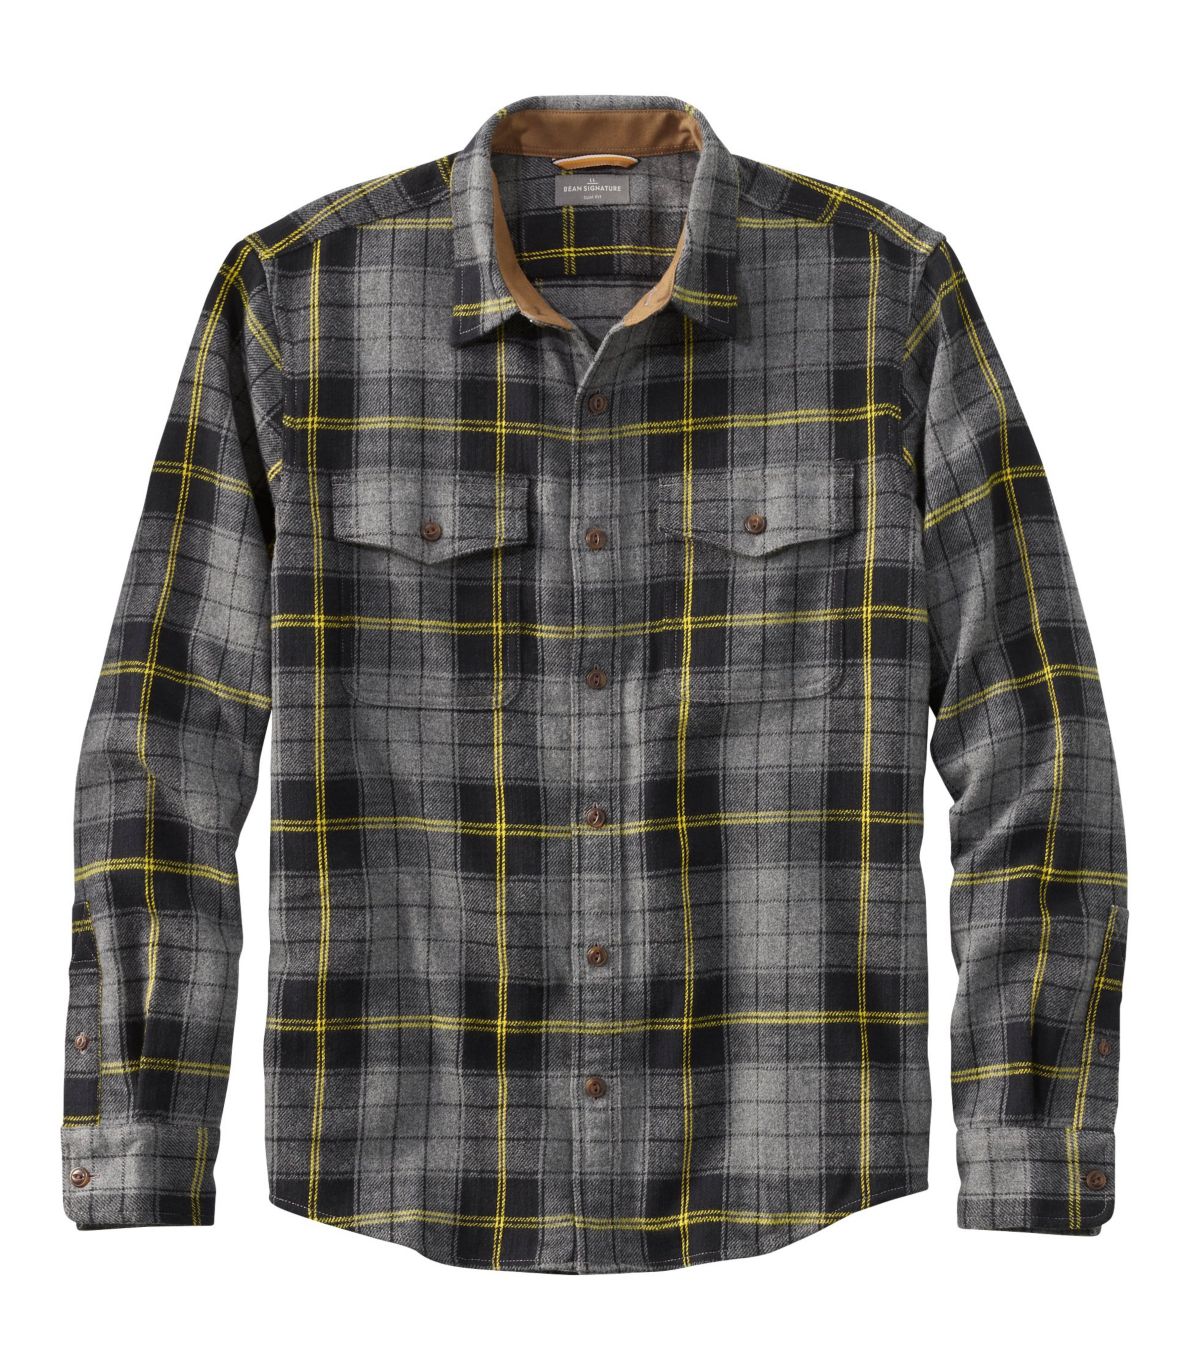 Men's Signature Heritage Textured Flannel Shirt